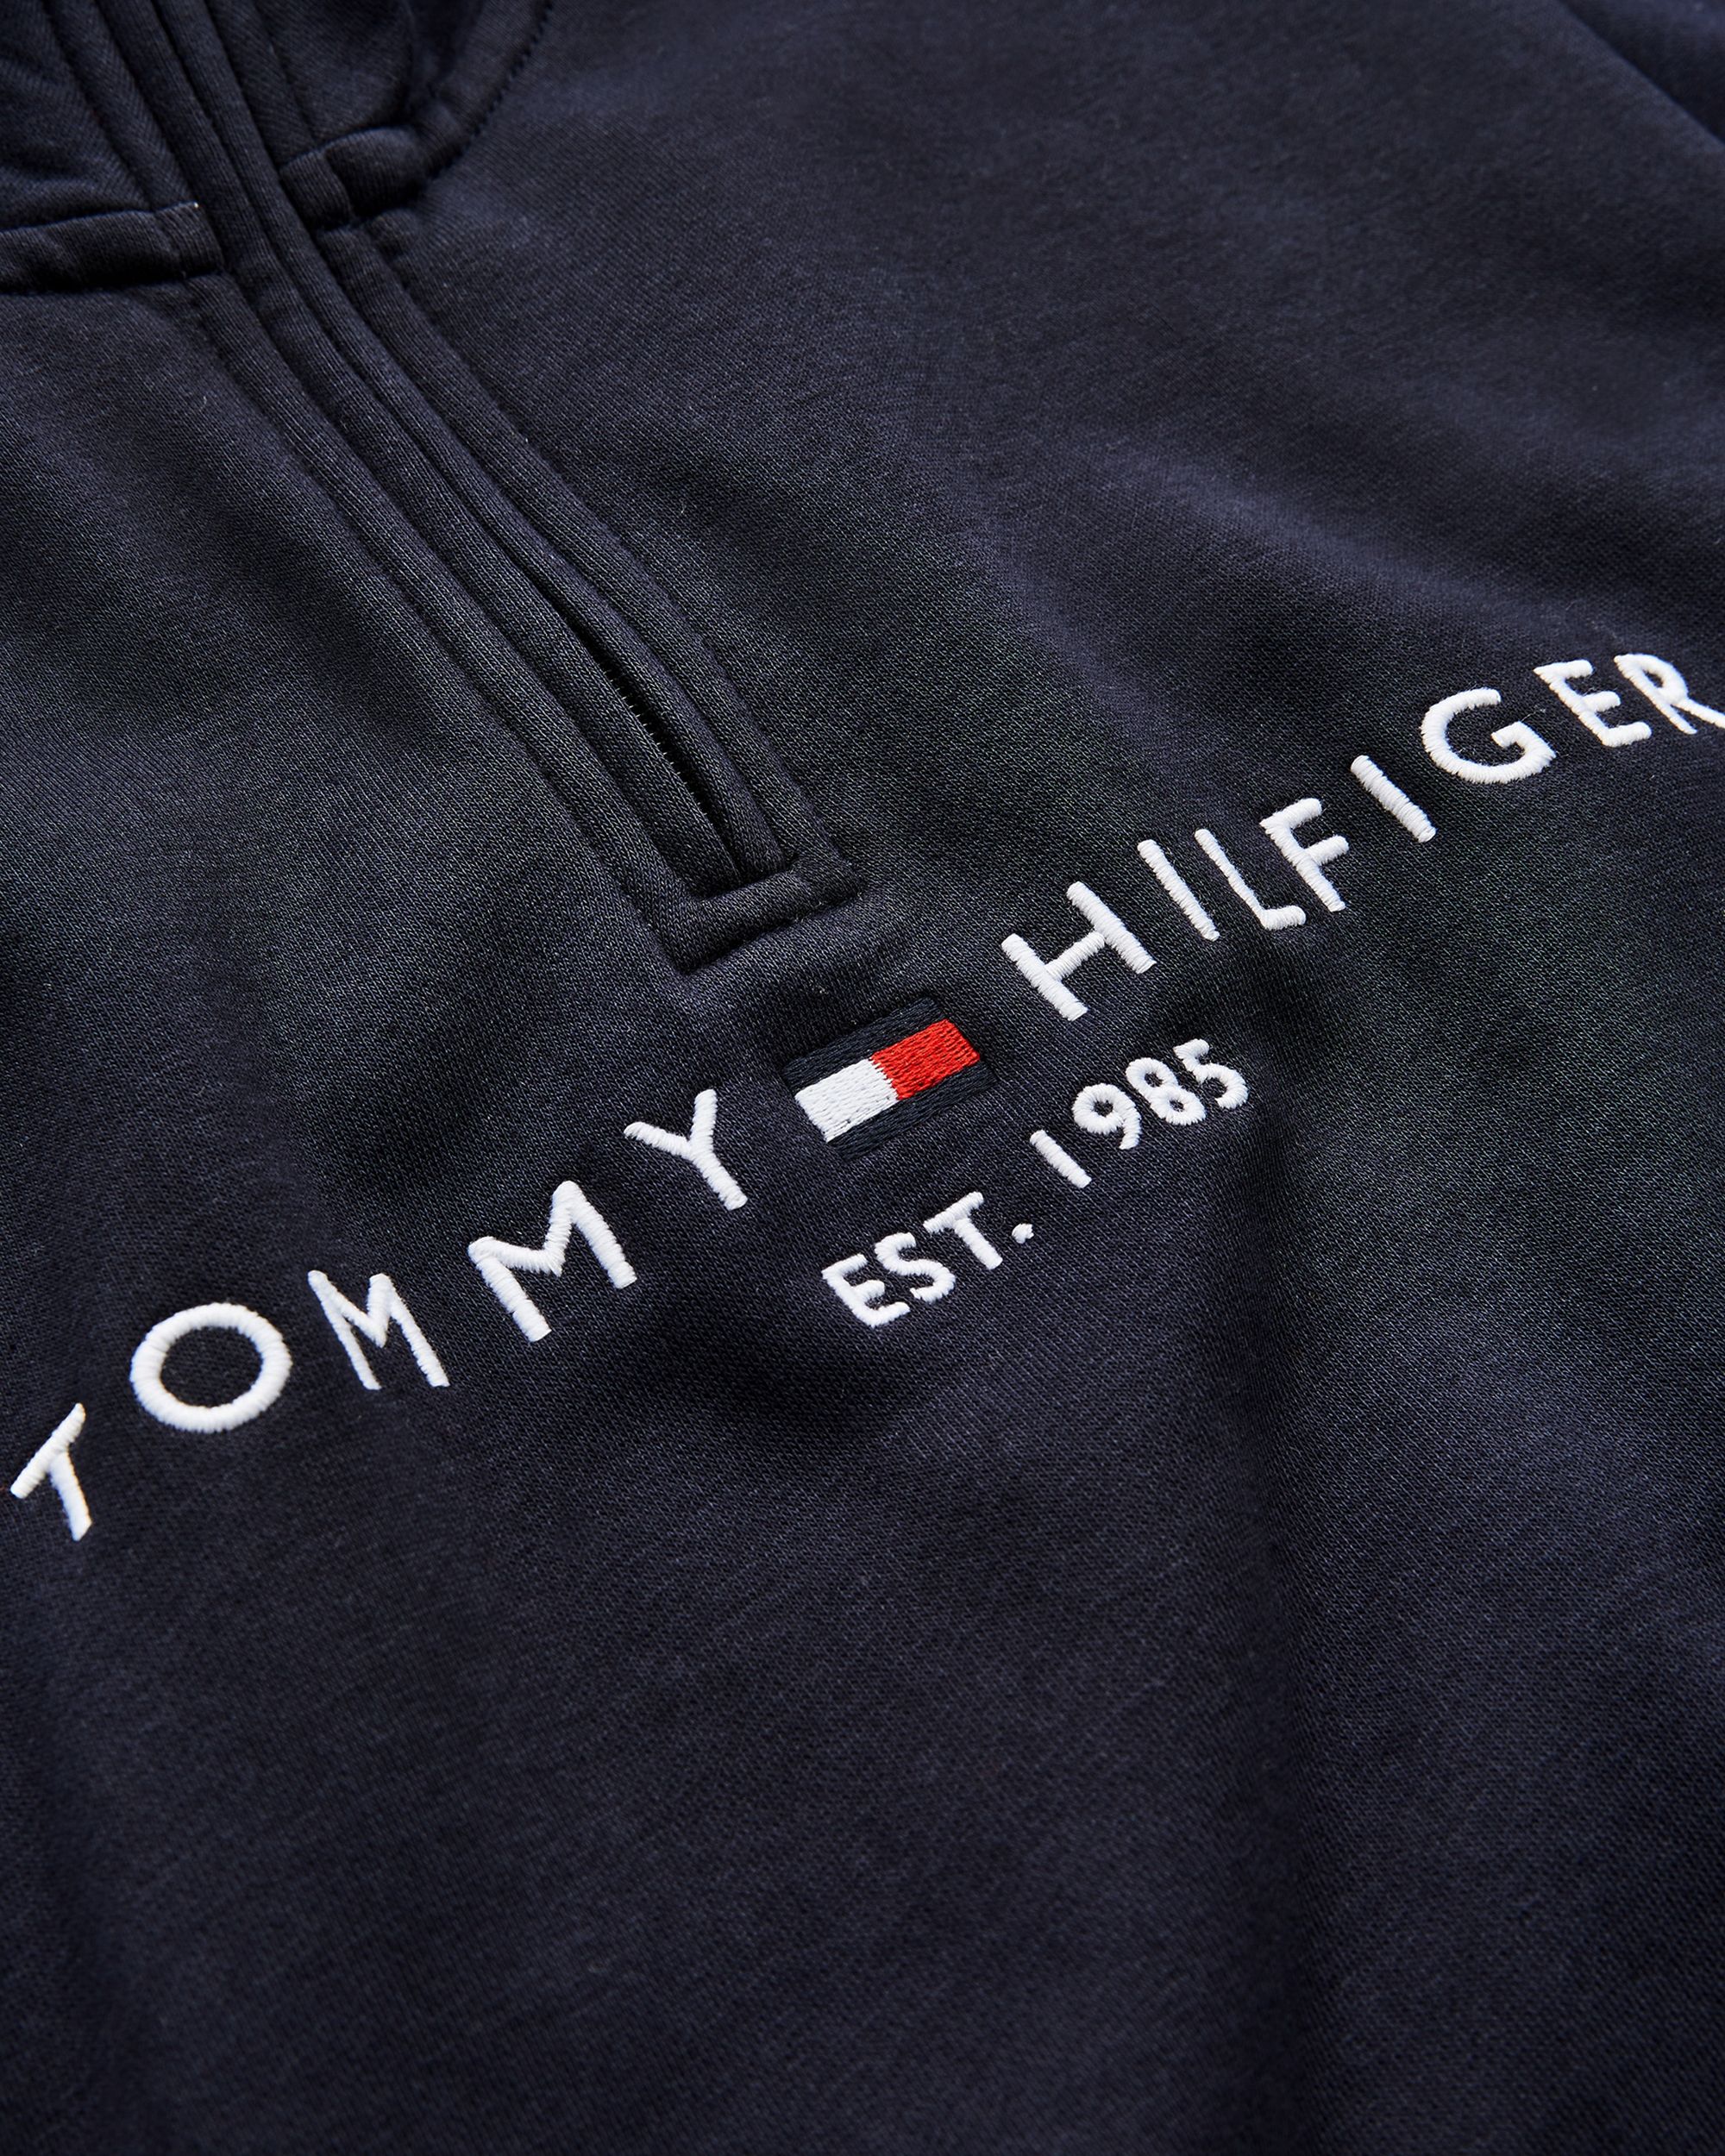 Tommy Hilfiger Menswear Schipperstrui Grijs 076322-001-L